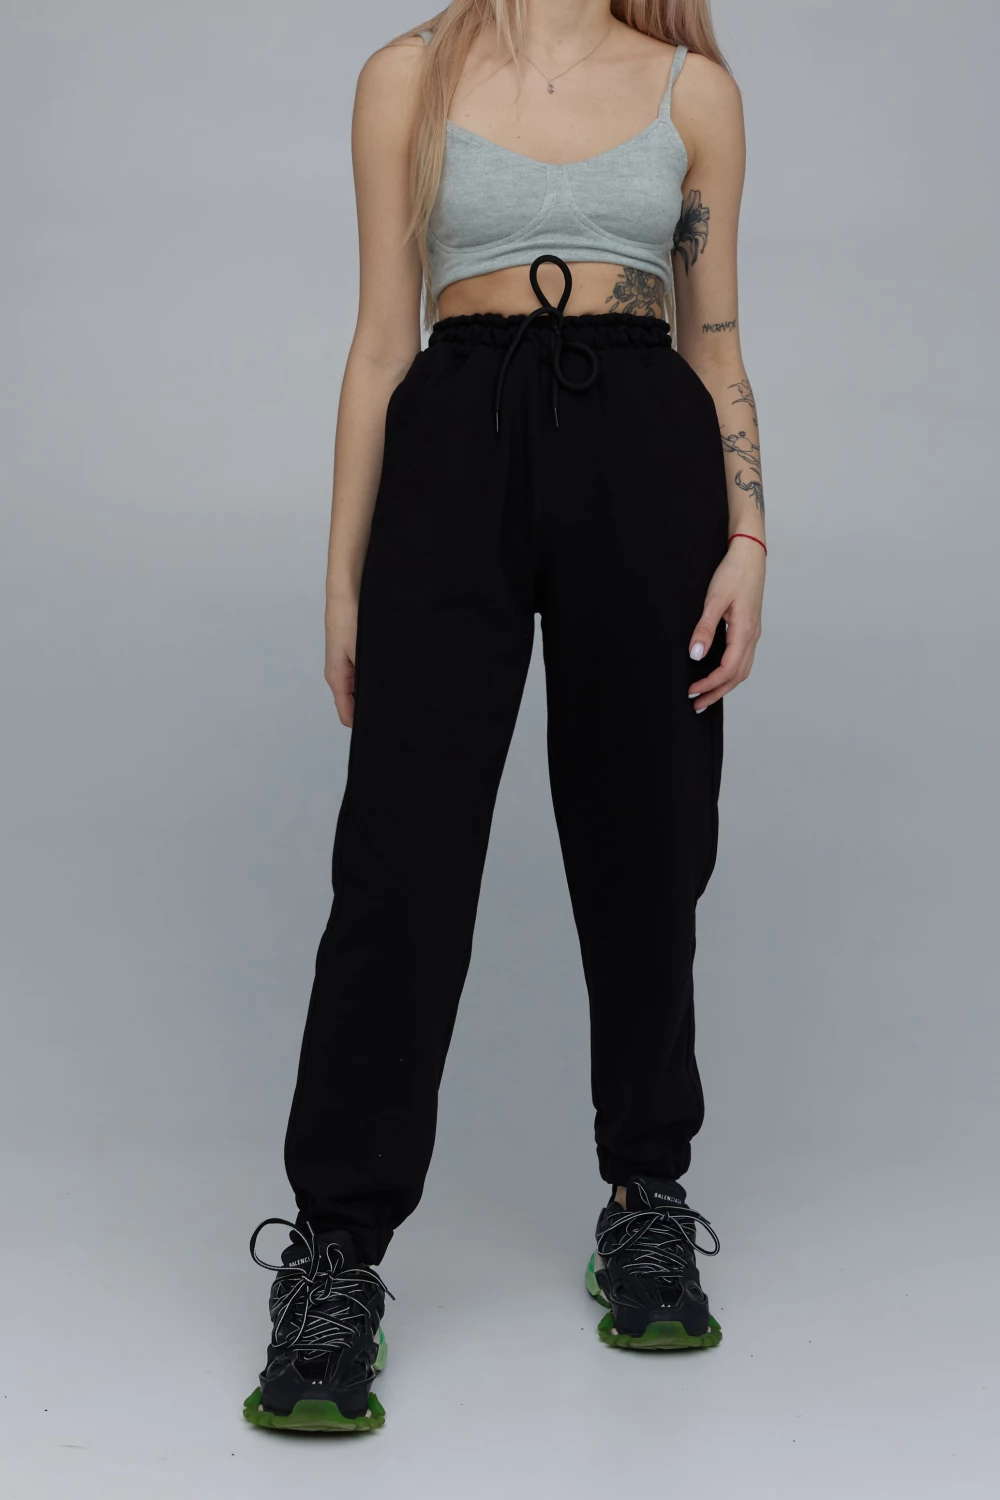 pants "unisex" in black color